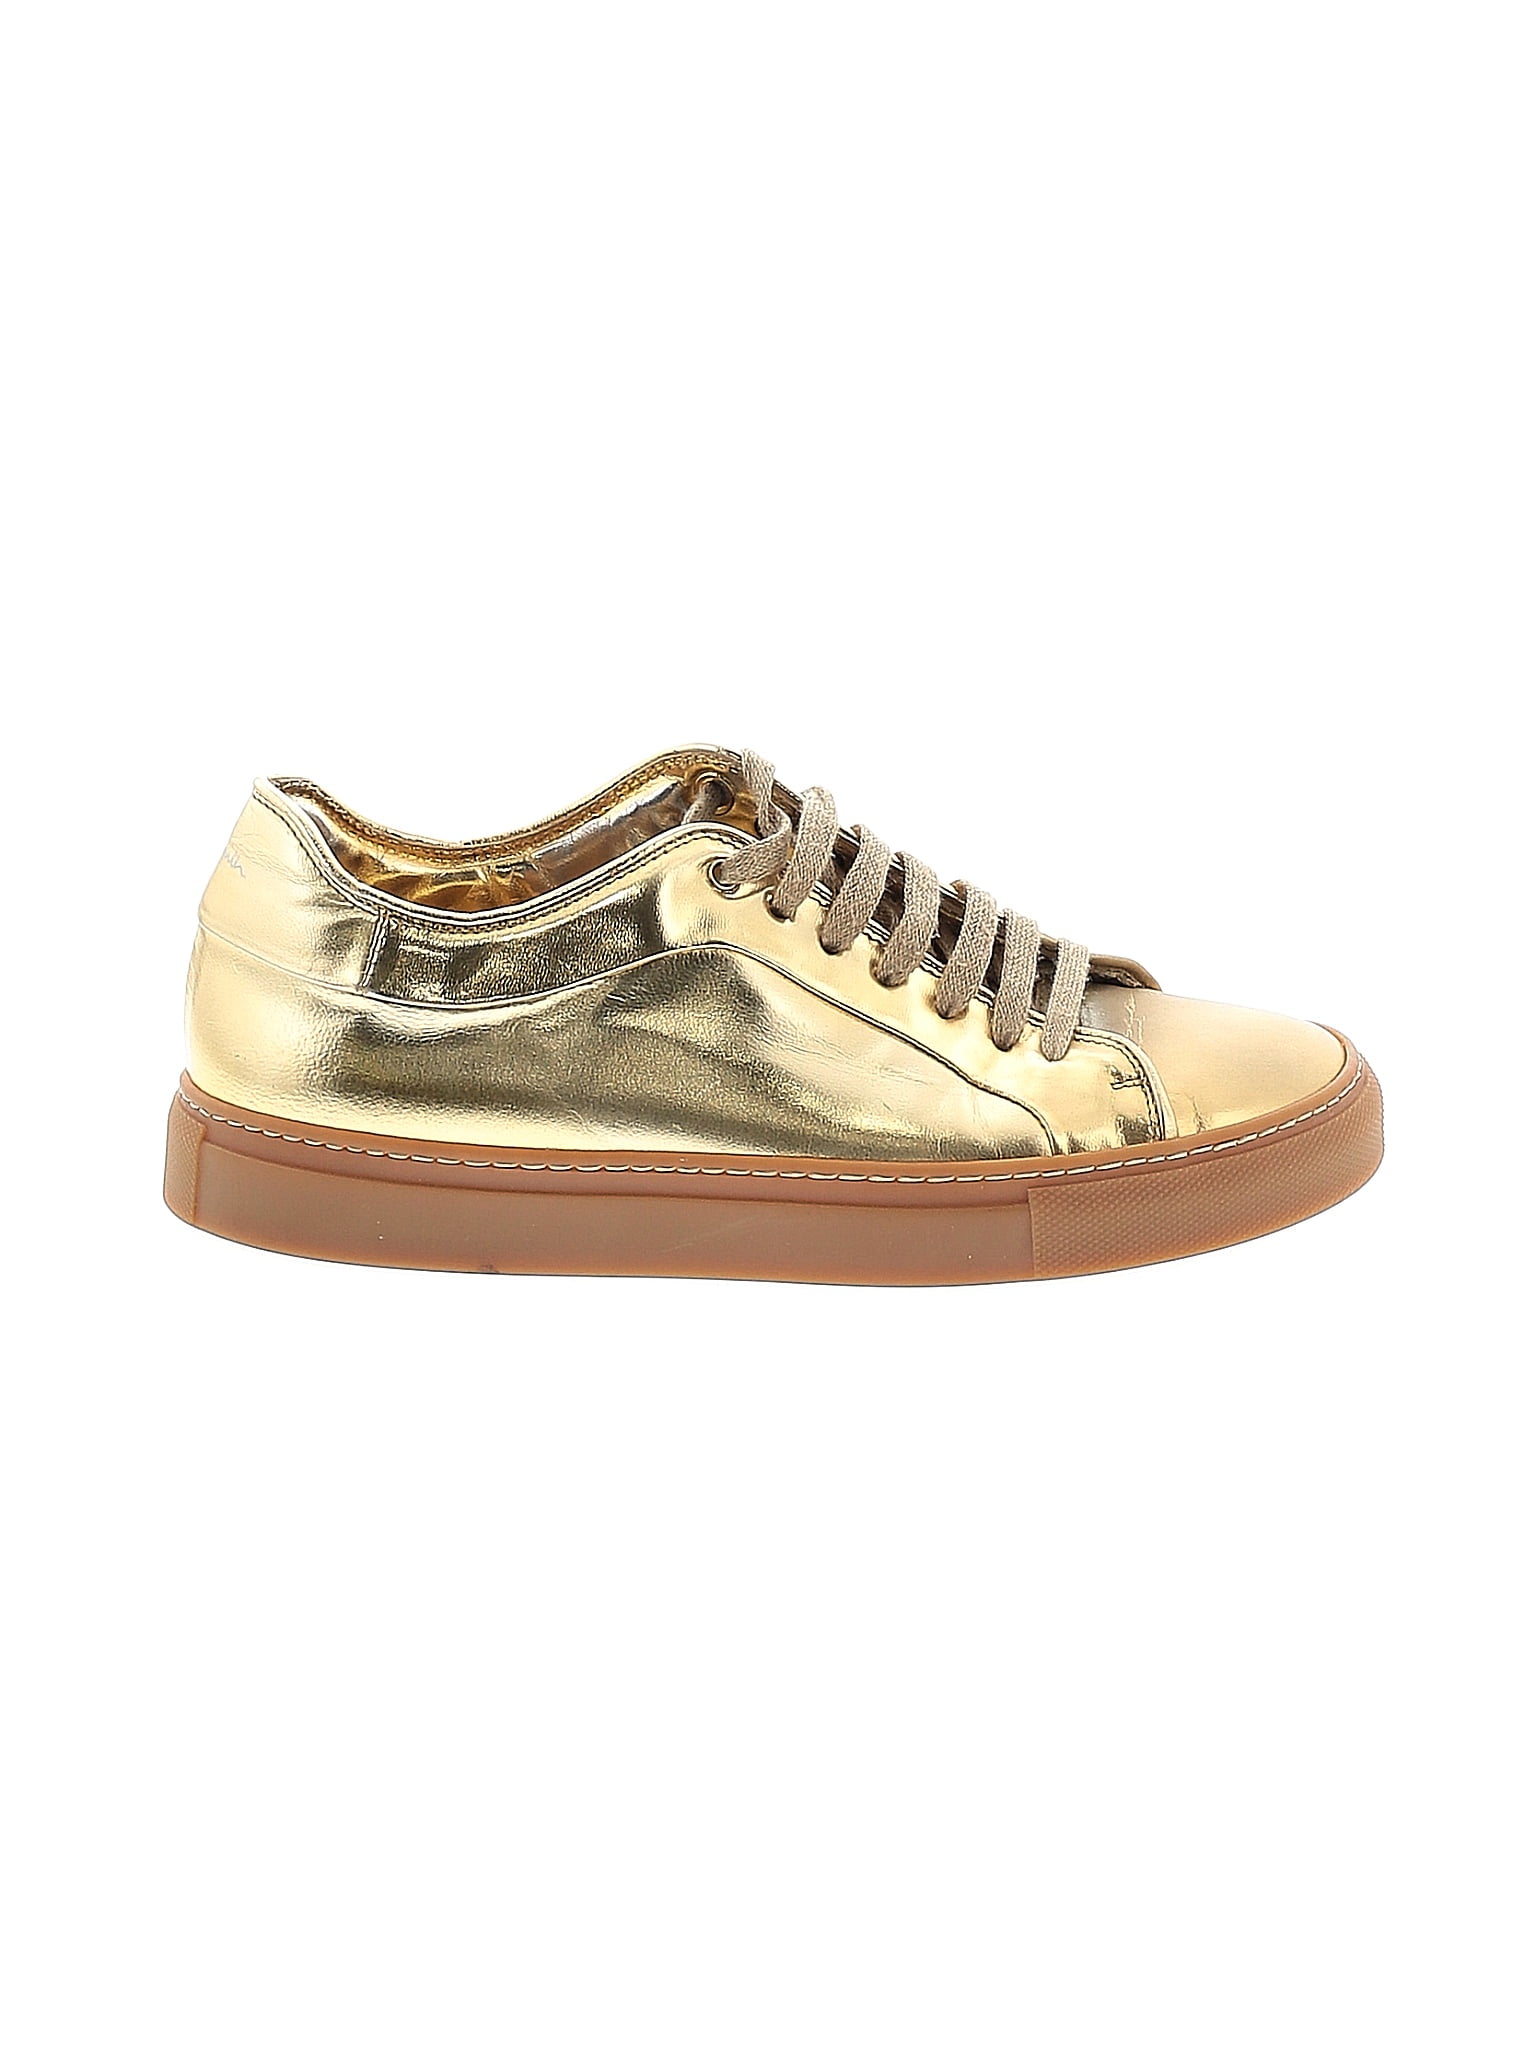 Paul Smith Metallic Gold Sneakers Size 37 (EU) - 79% off | thredUP